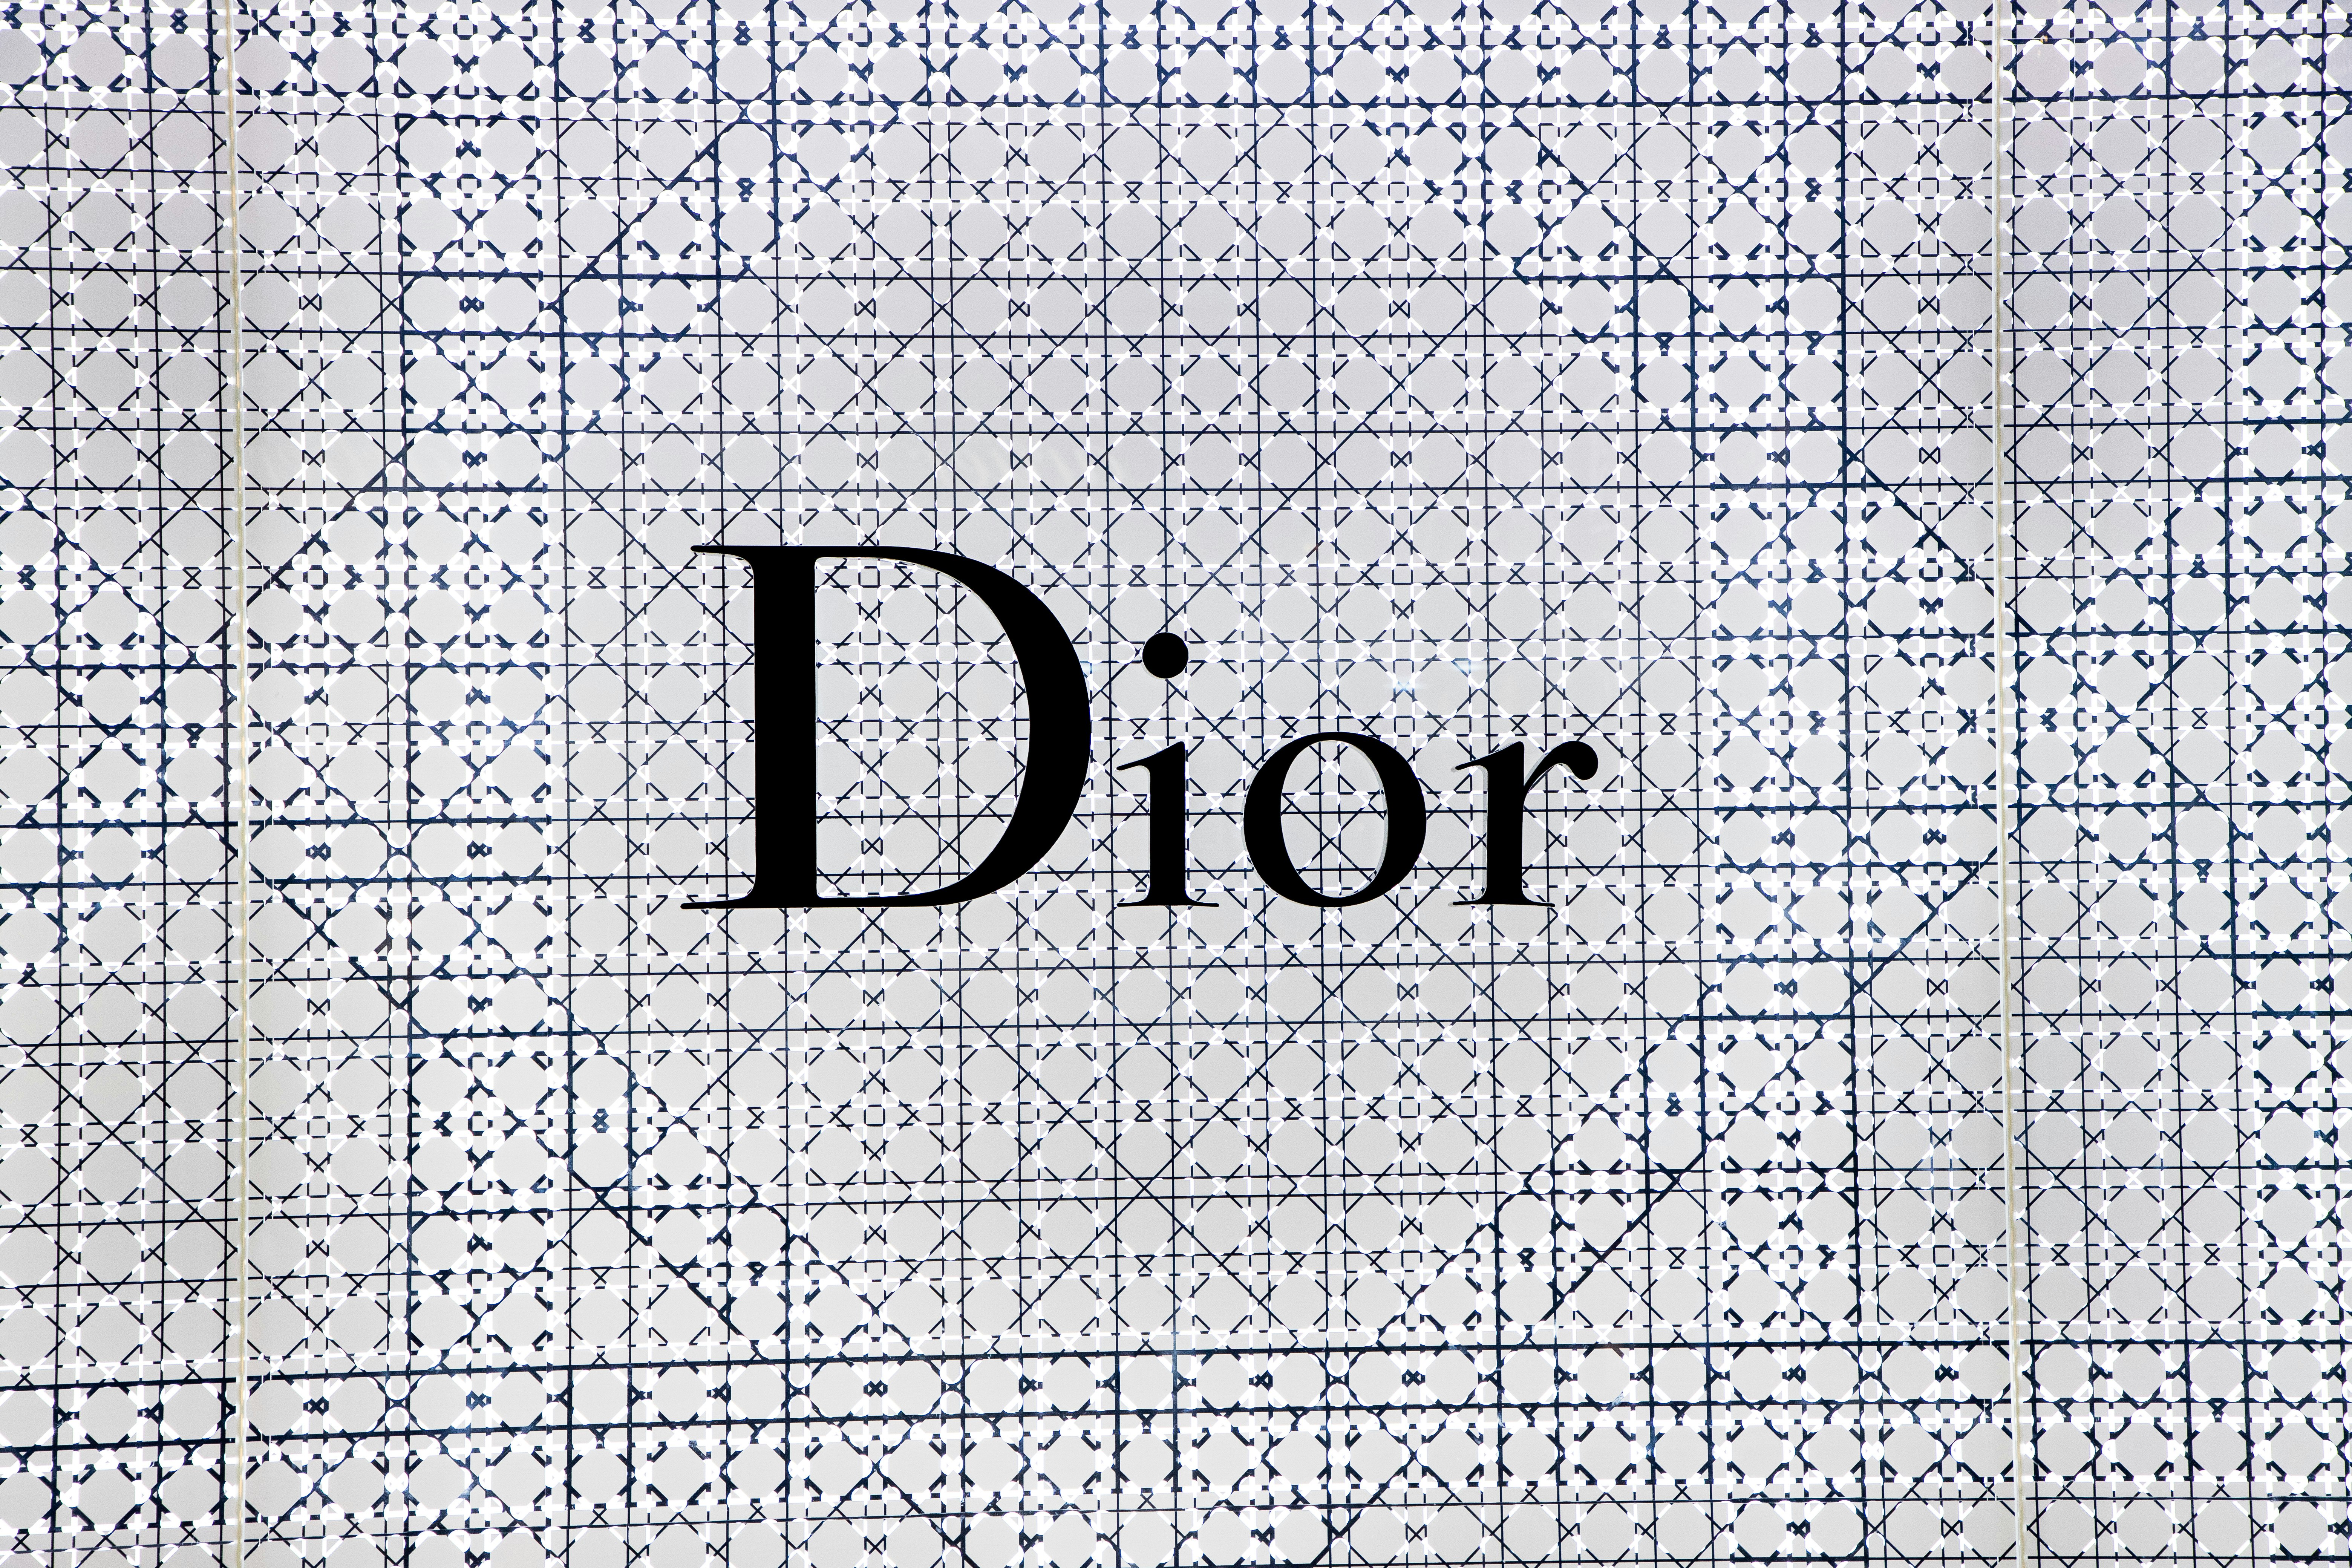 Dior text